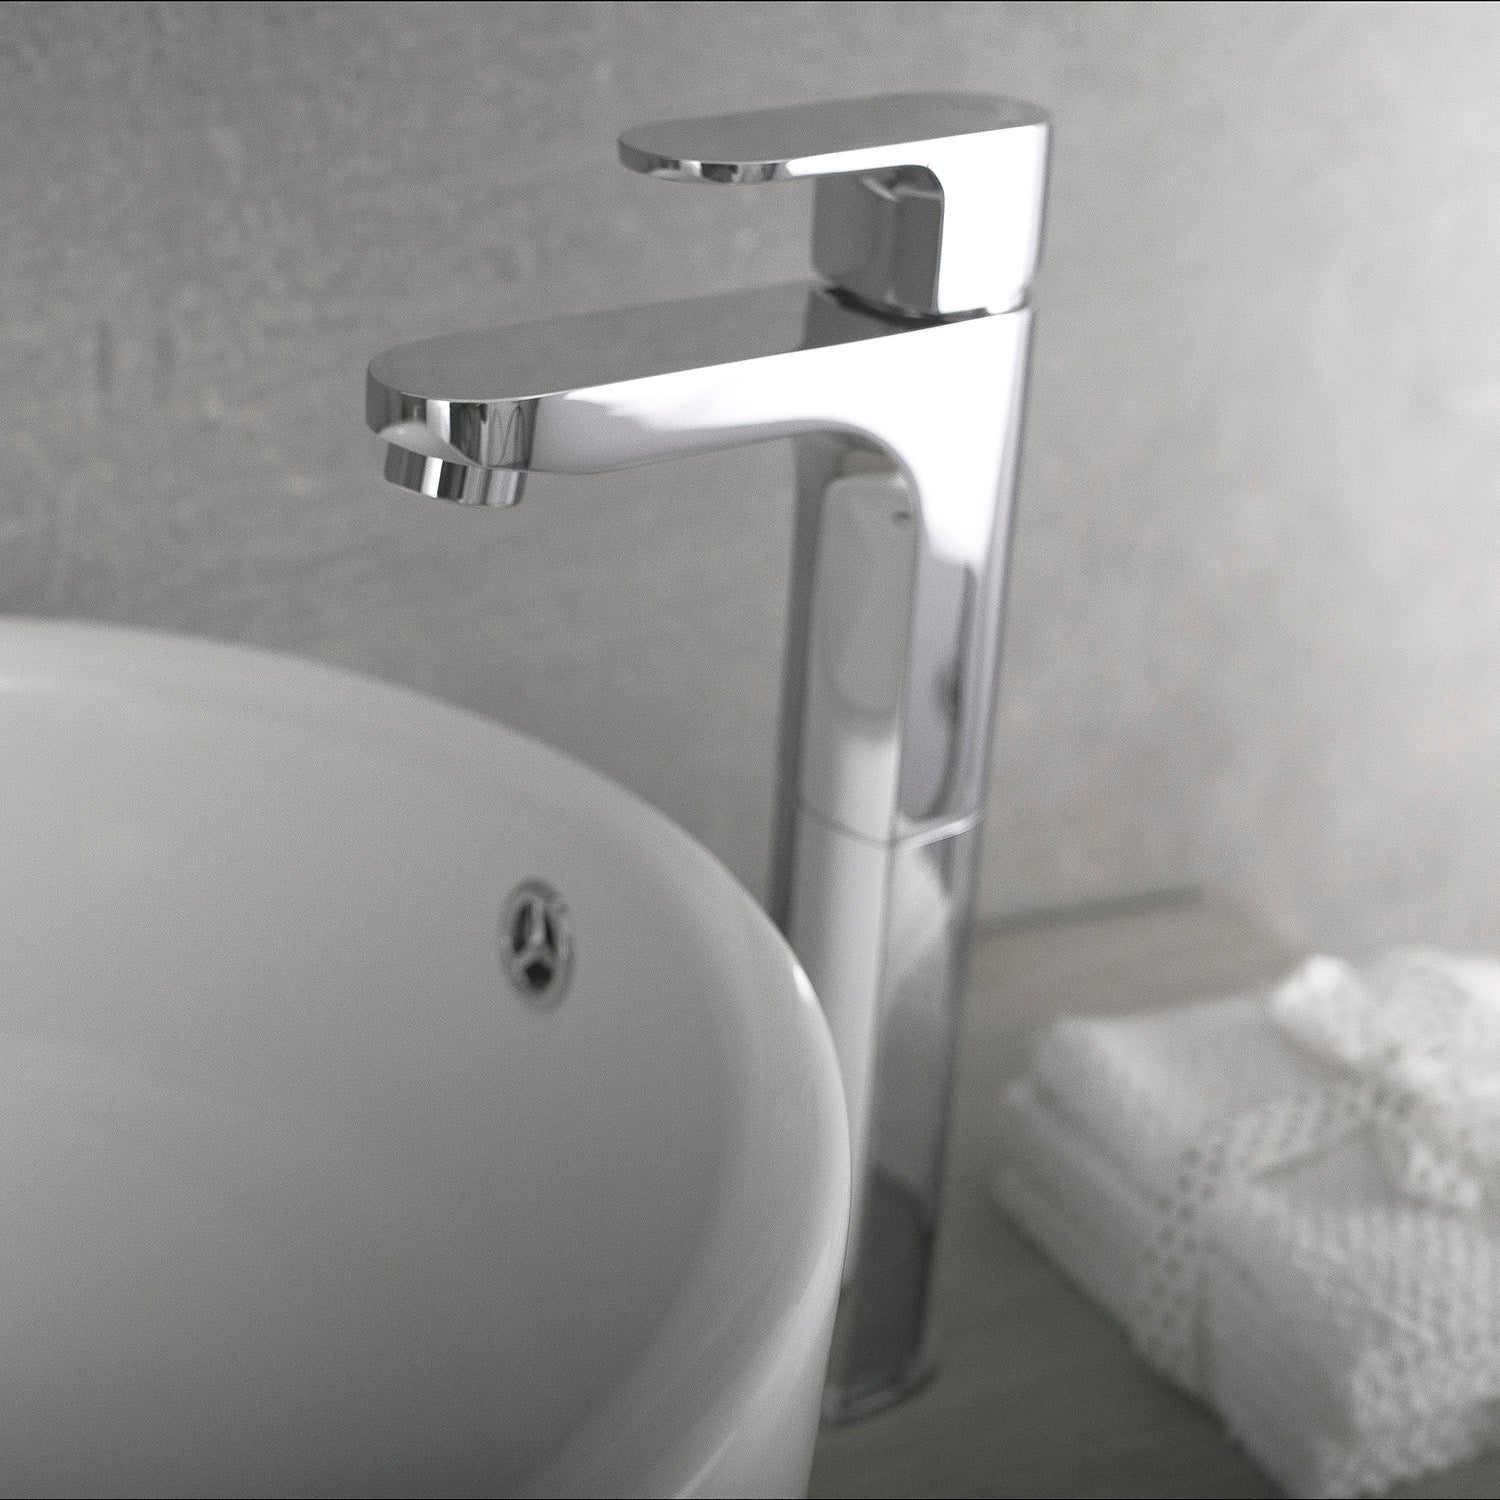 DAX Single Handle Vessel Sink Bathroom Faucet, Brass Body, Chrome Finish, 4-3/4 x 12-13/16 Inches (DAX-9889B)